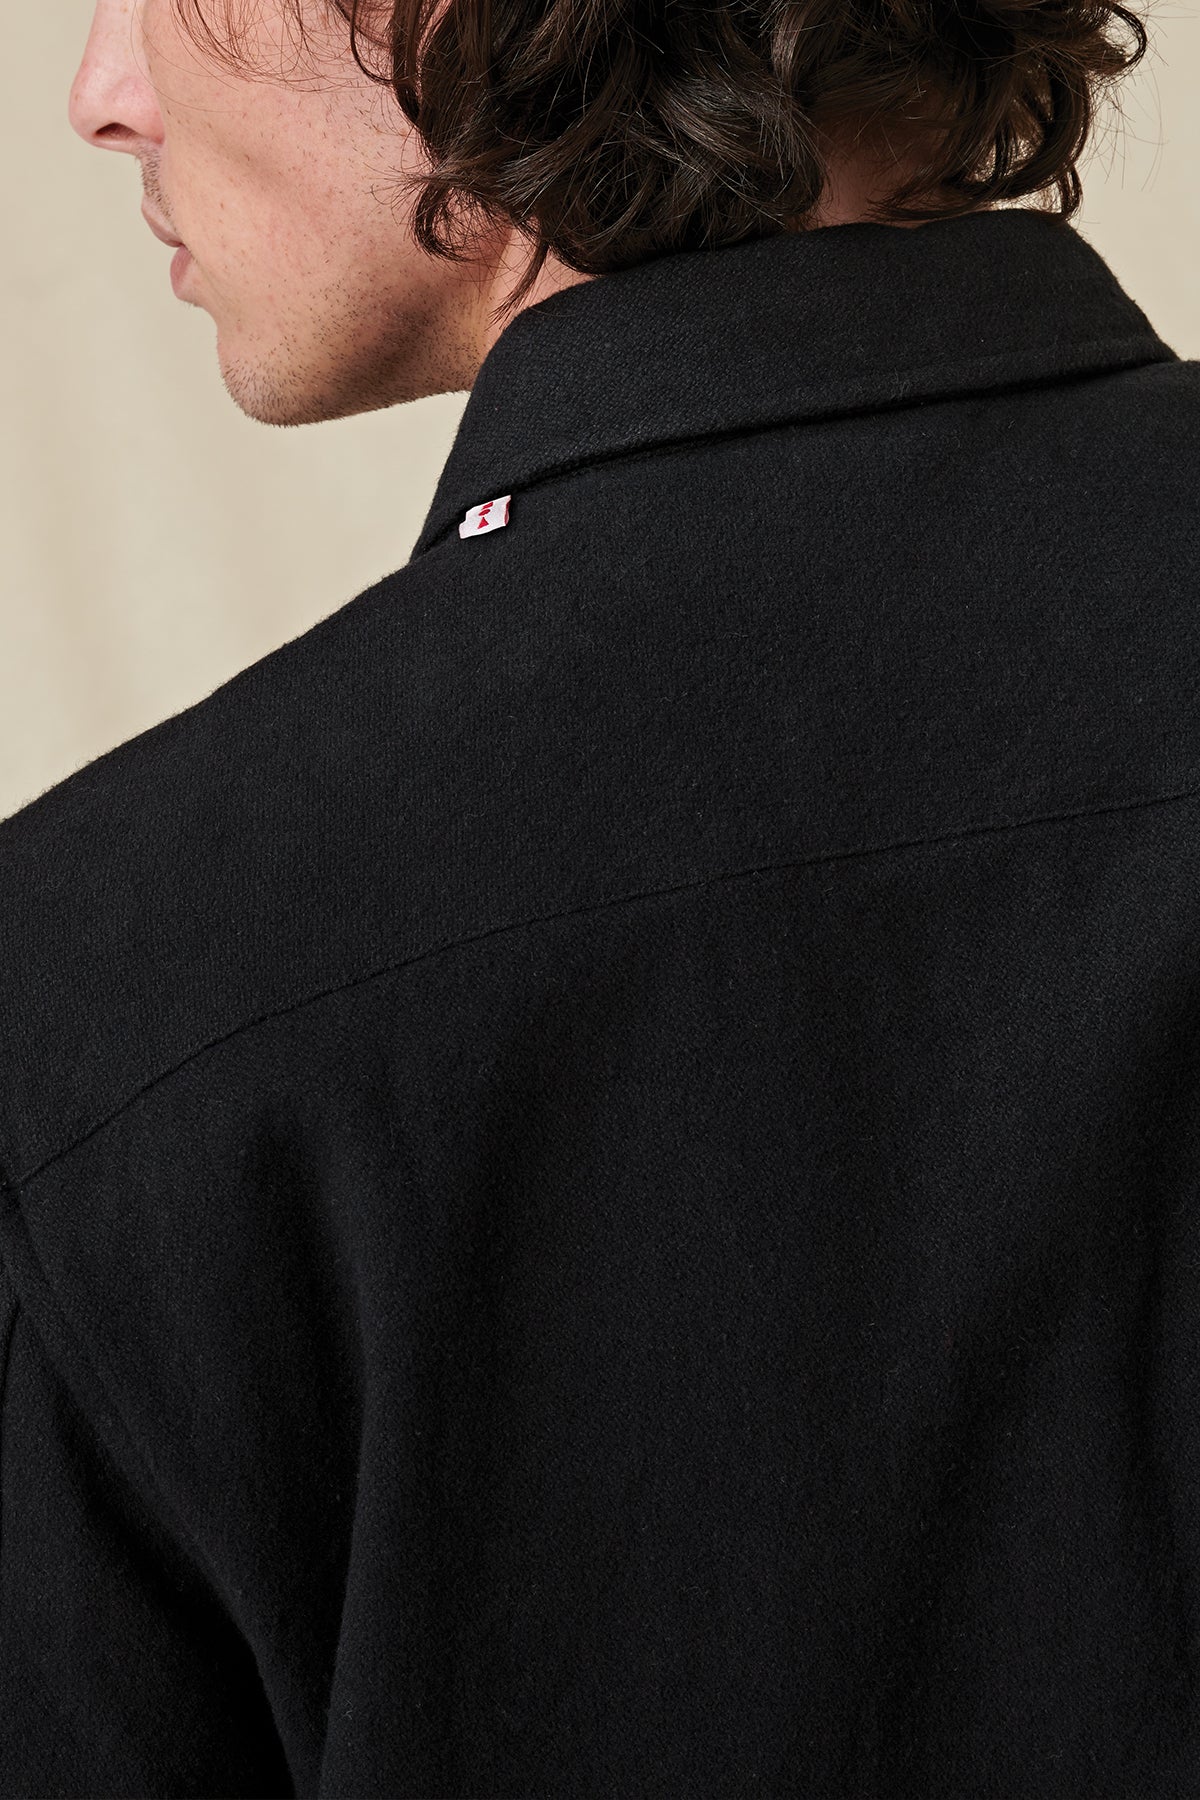 back collar of Black Globe button up jacket